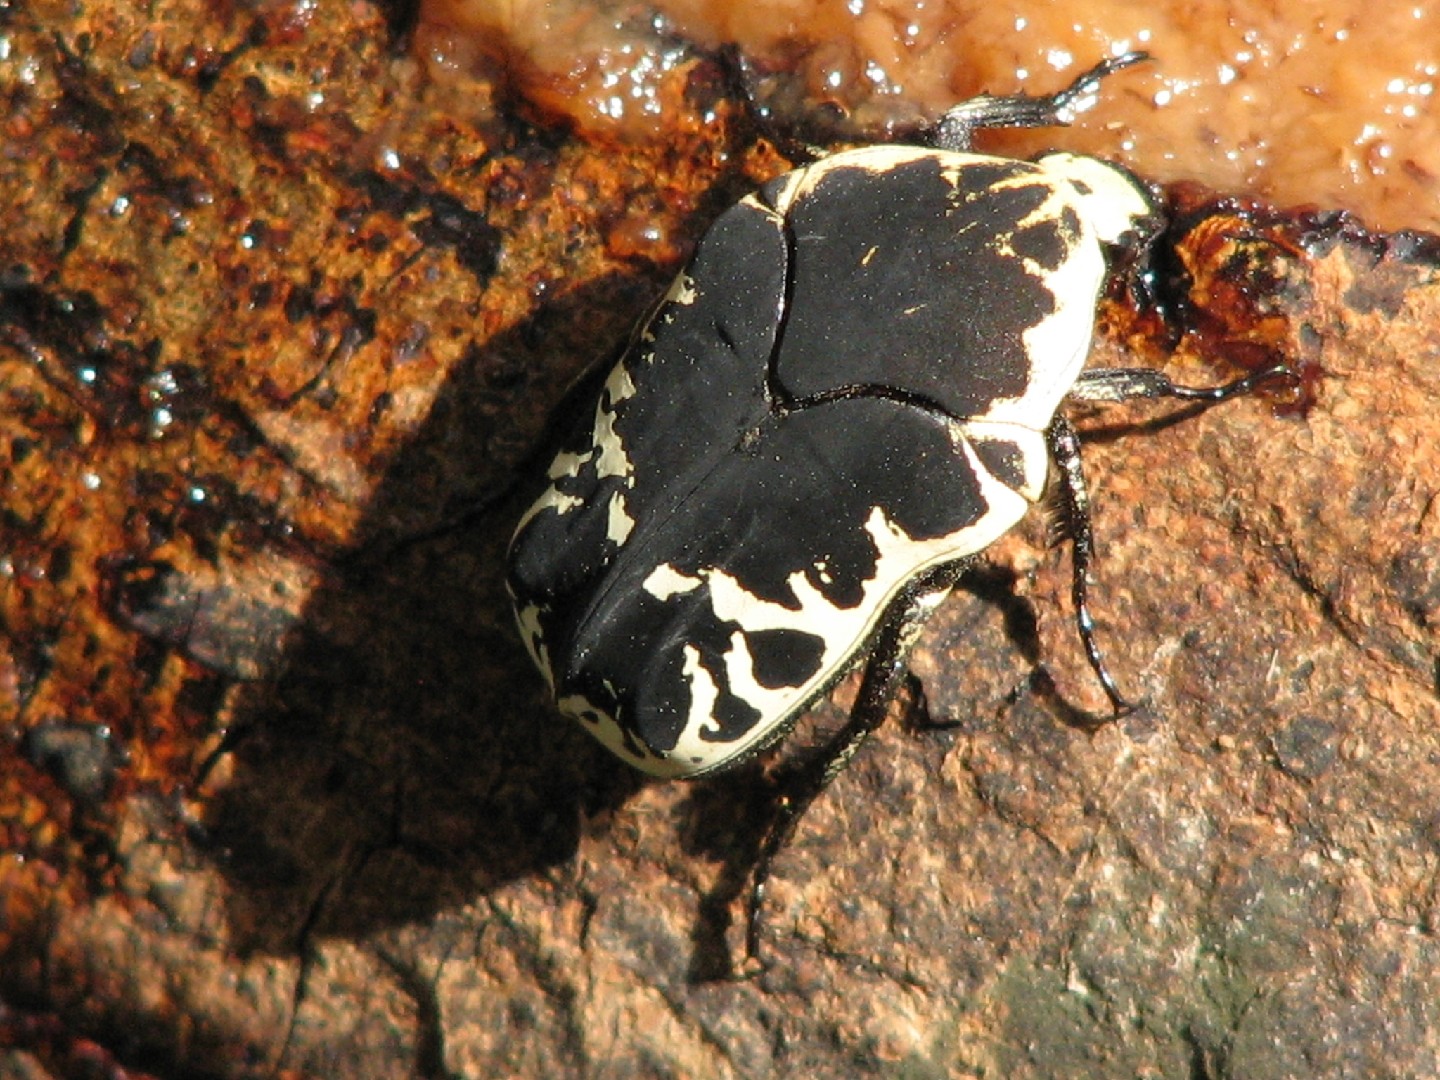 Flower beetles (Gymnetis)